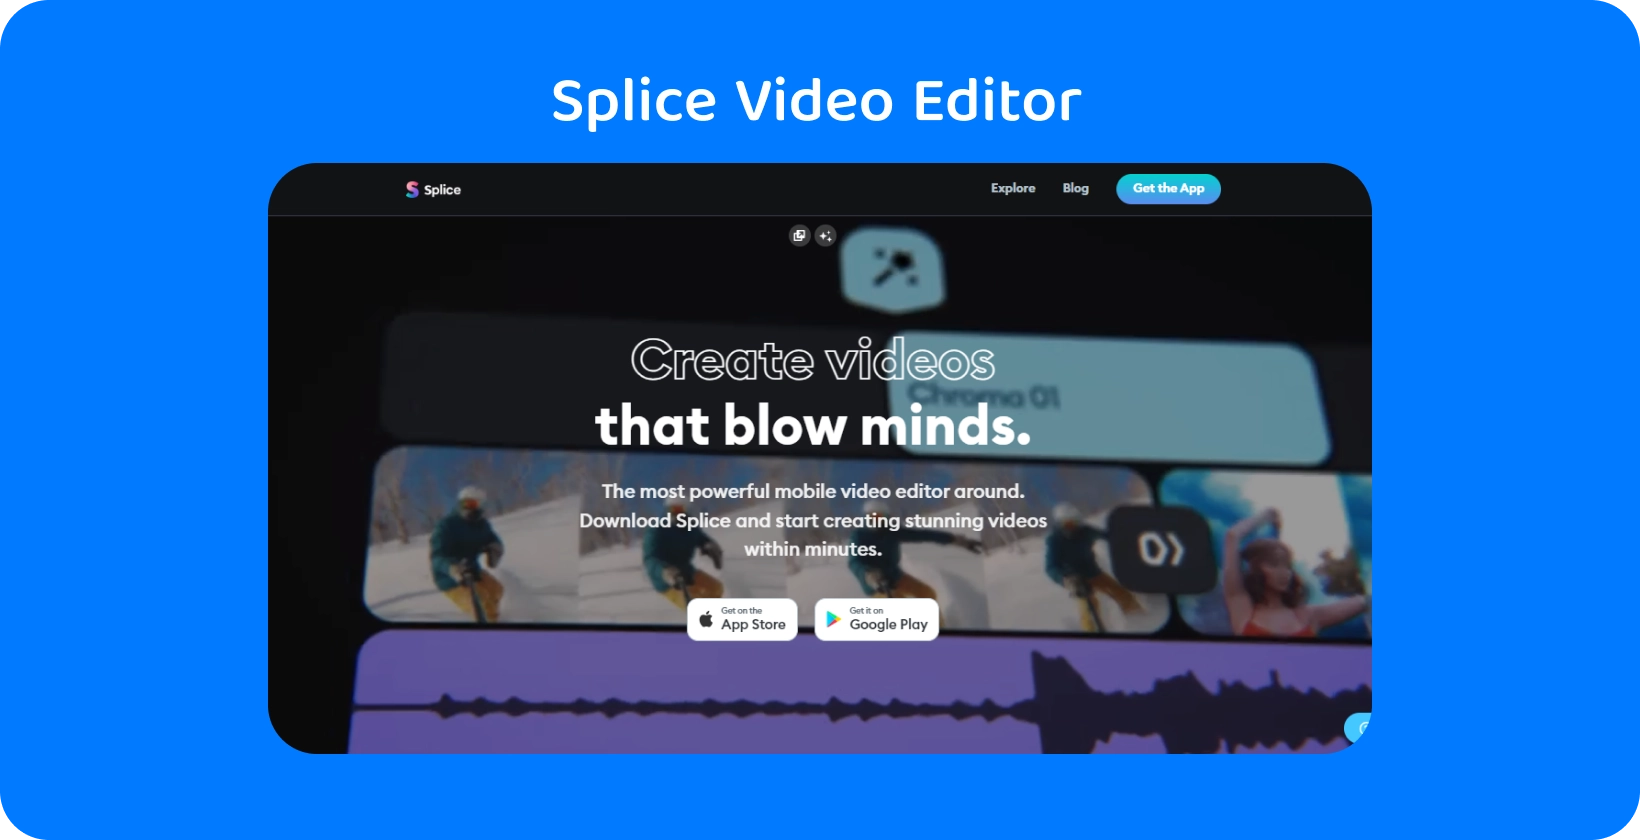 Splice promosi aplikasi pada telefon pintar, menganggapnya sebagai editor video mudah alih yang paling berkuasa untuk membuat video yang menakjubkan.